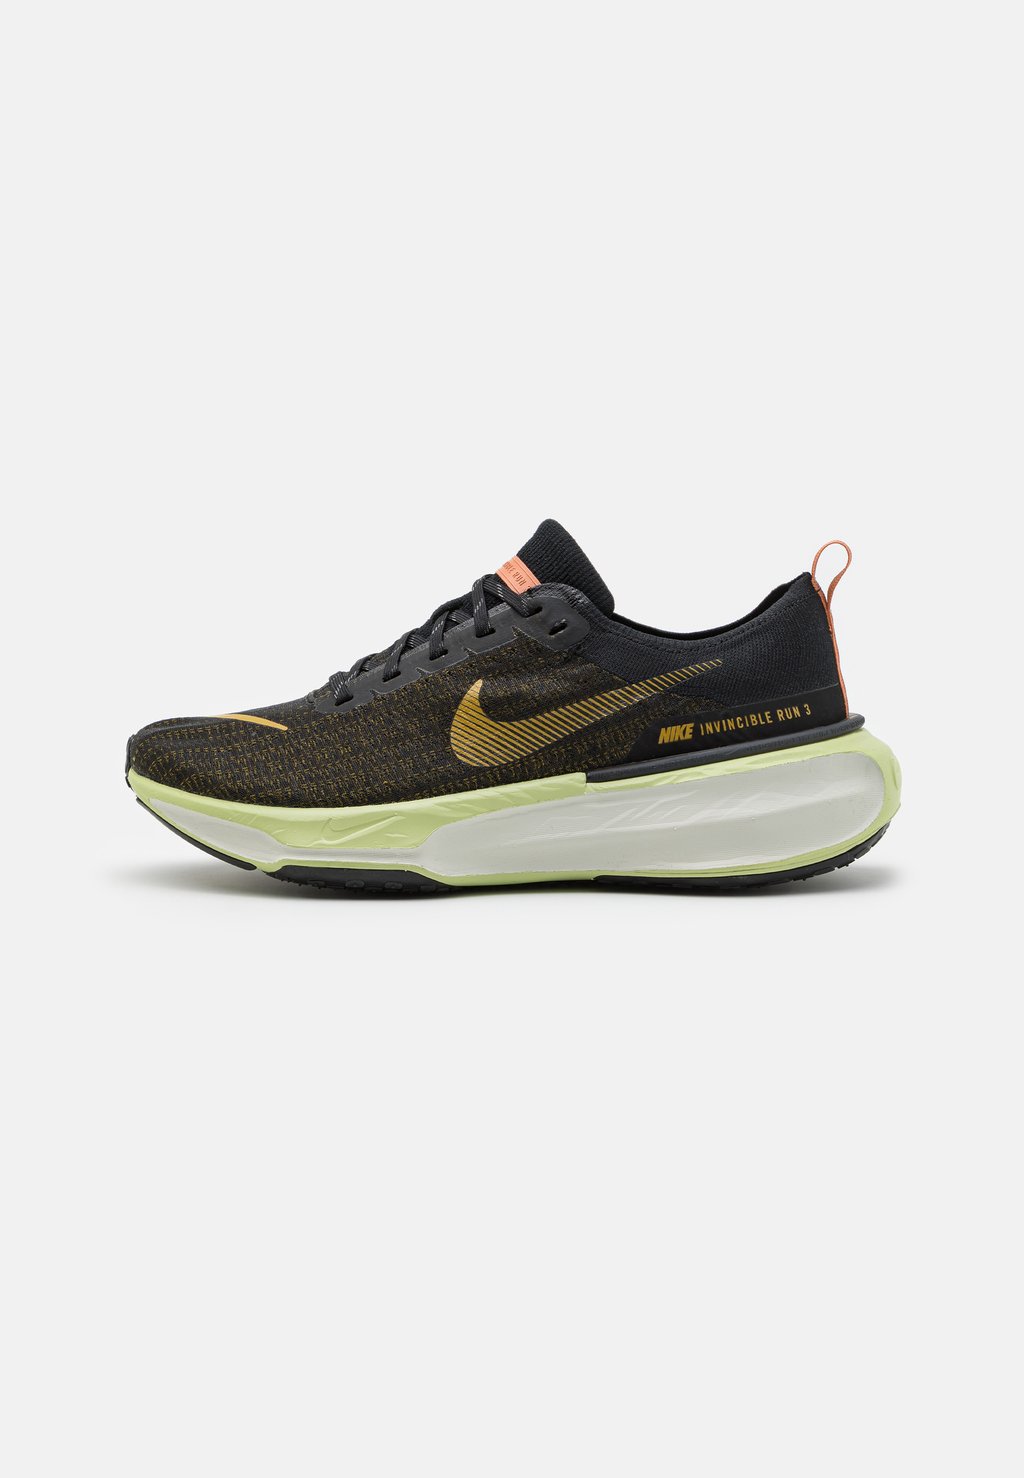 Нейтральные кроссовки Zoomx Invincible Run Fk 3 Nike, цвет black/bronzine/olive aura/amber brown/sea glass